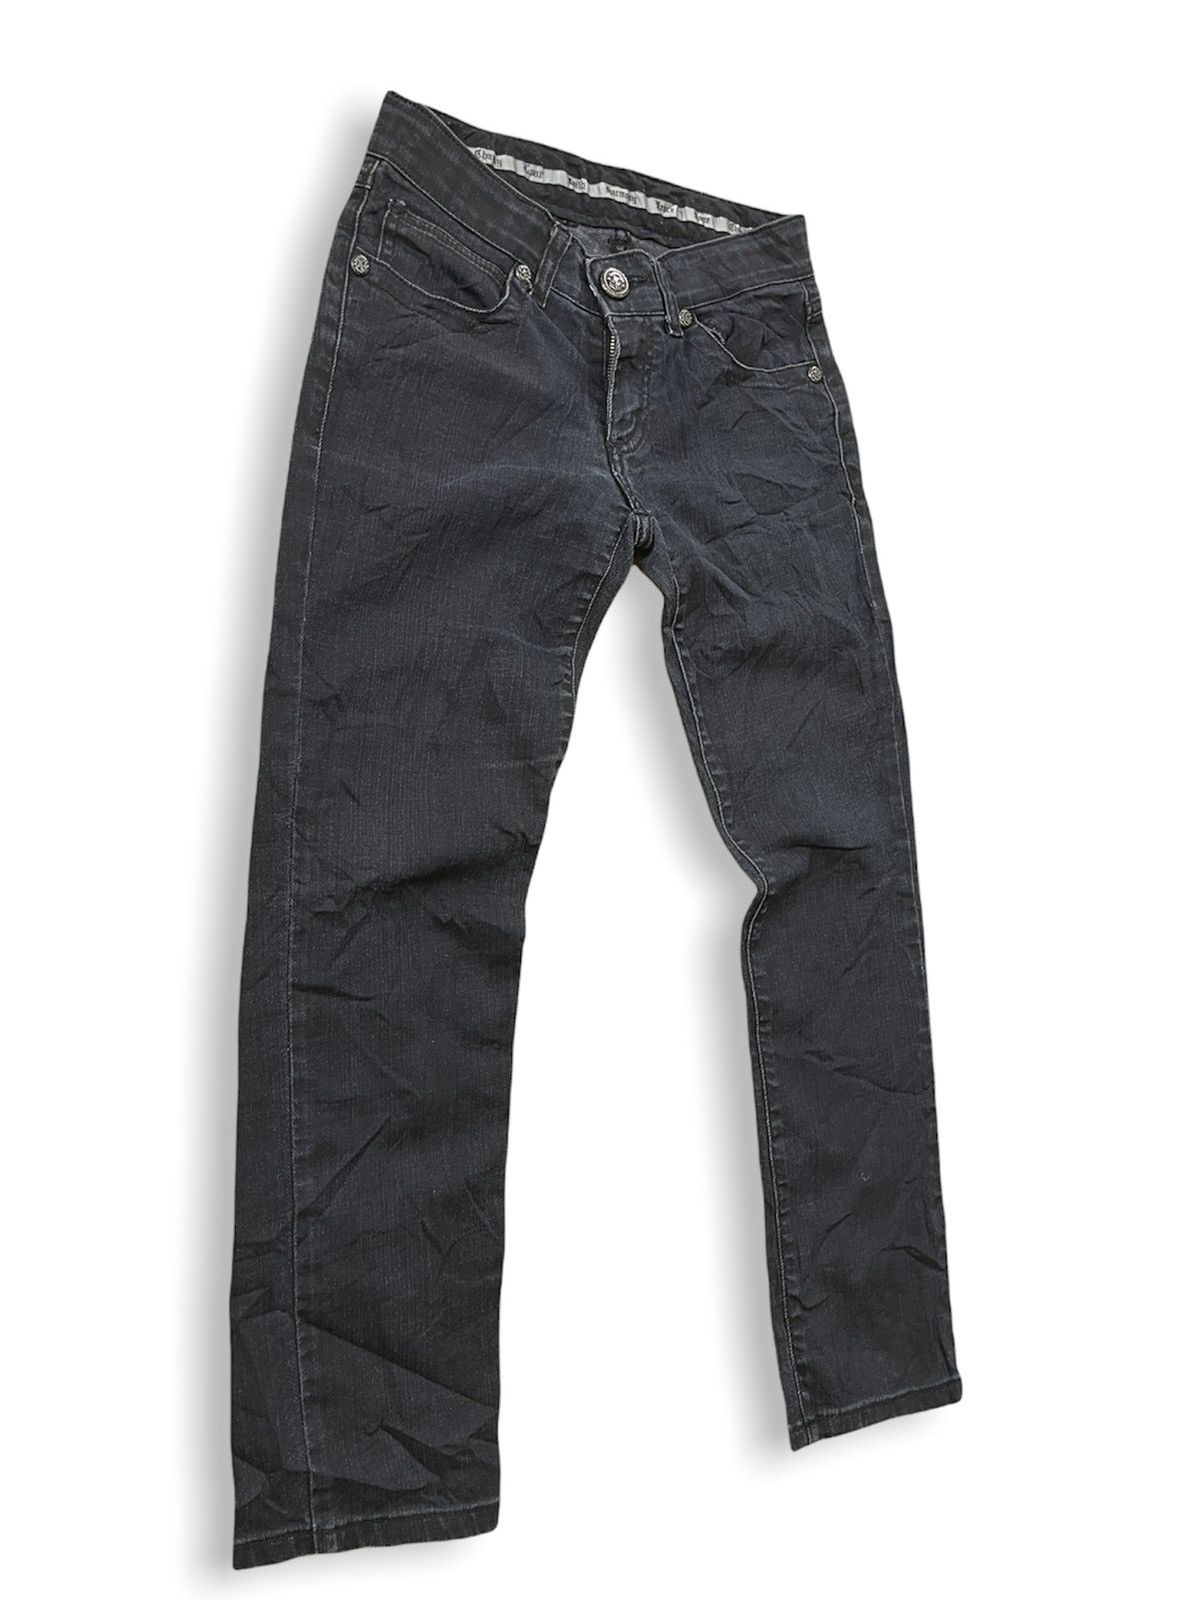 Archival Clothing - Faith Connexion Black Denim Jeans Made In Japan - 5